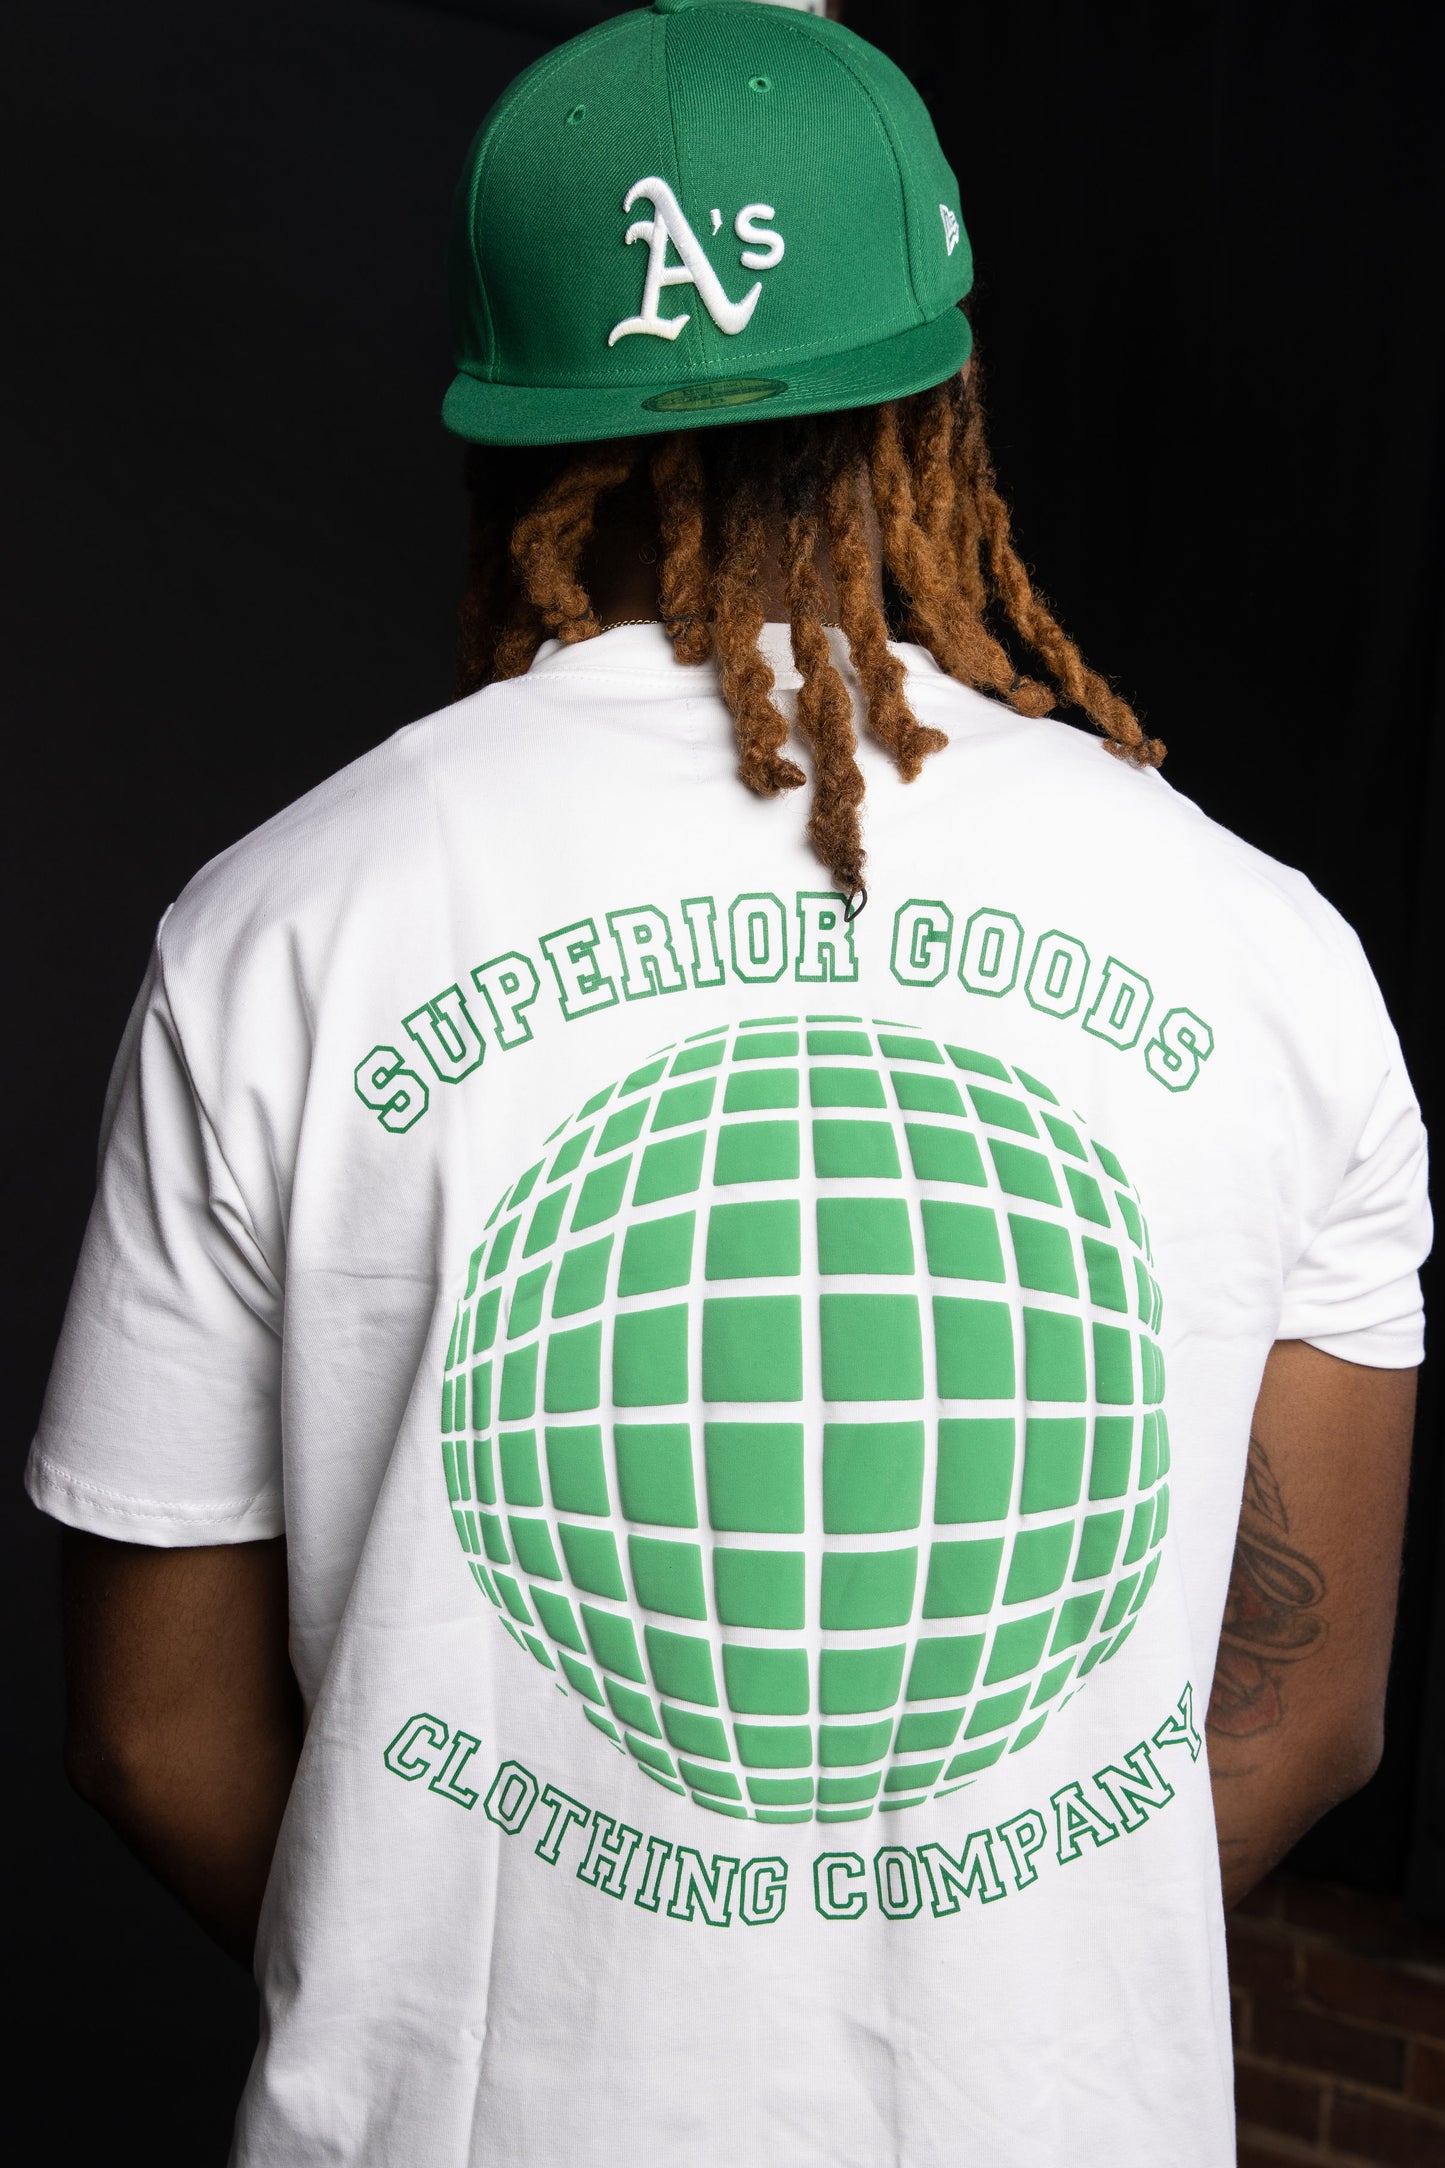 Global “Green” T-shirt